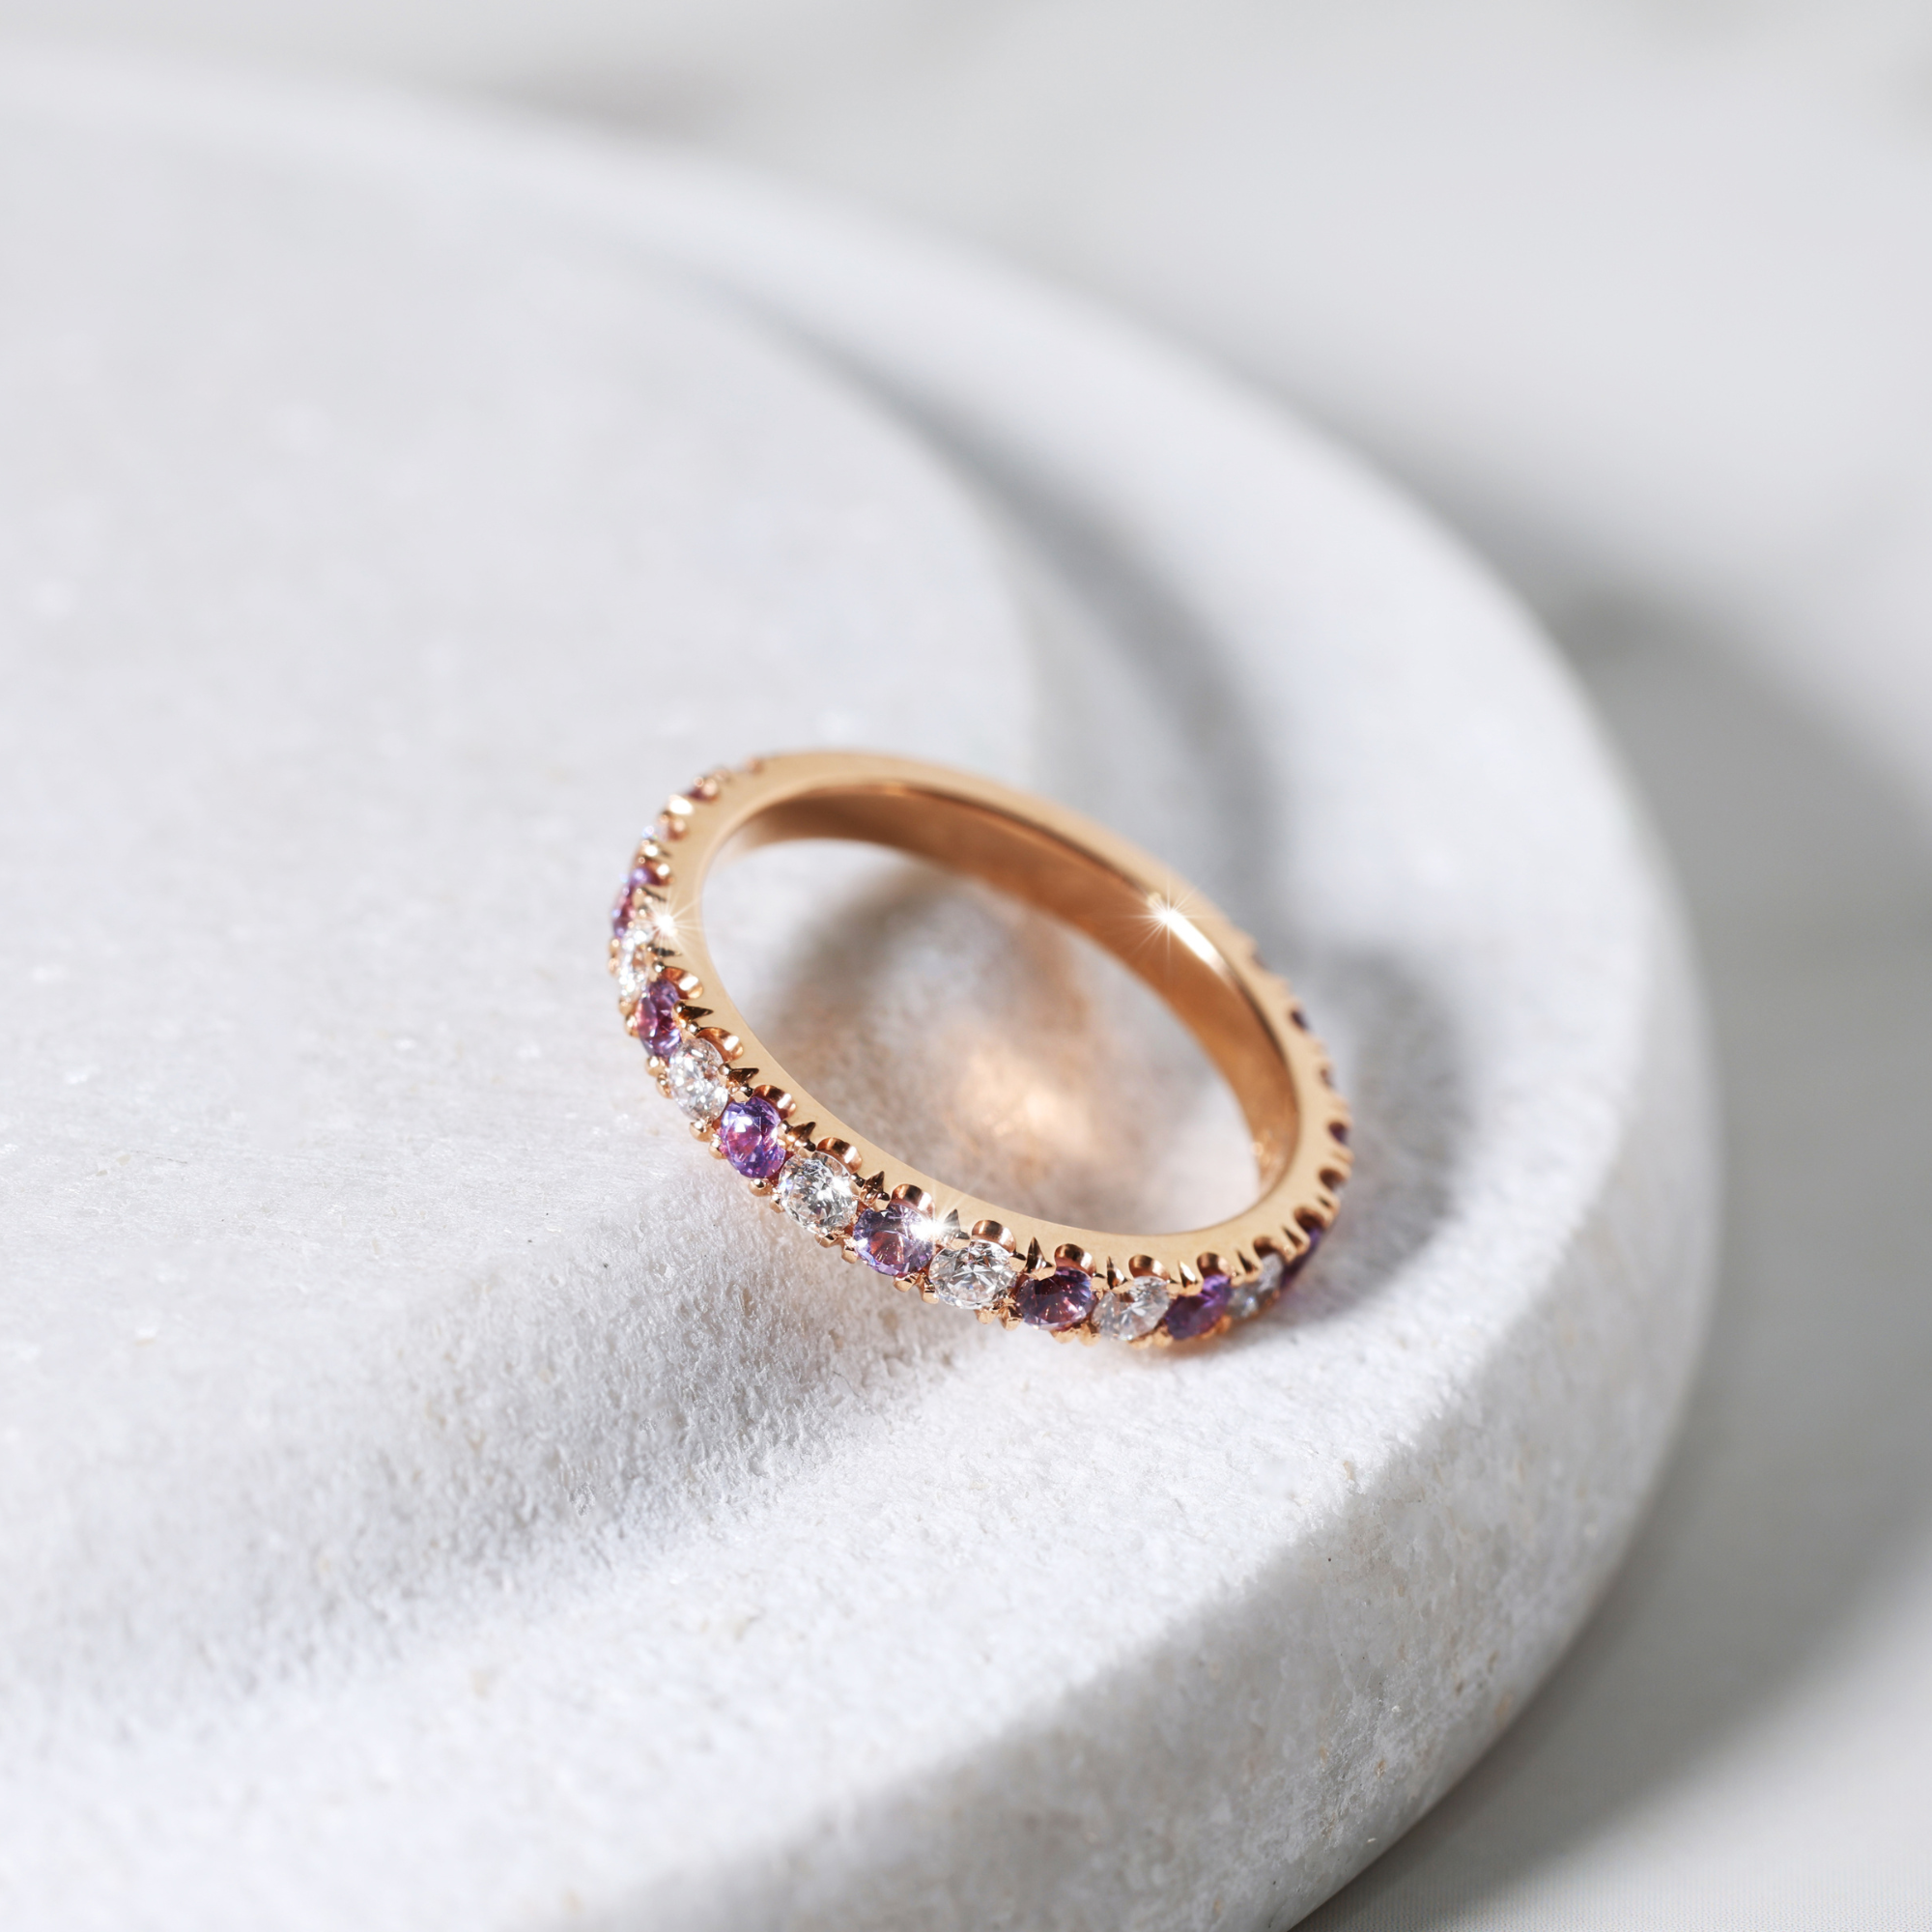 Castle-Set ROUND BRILLIANT CUT Purple Sapphire & Diamond Ring